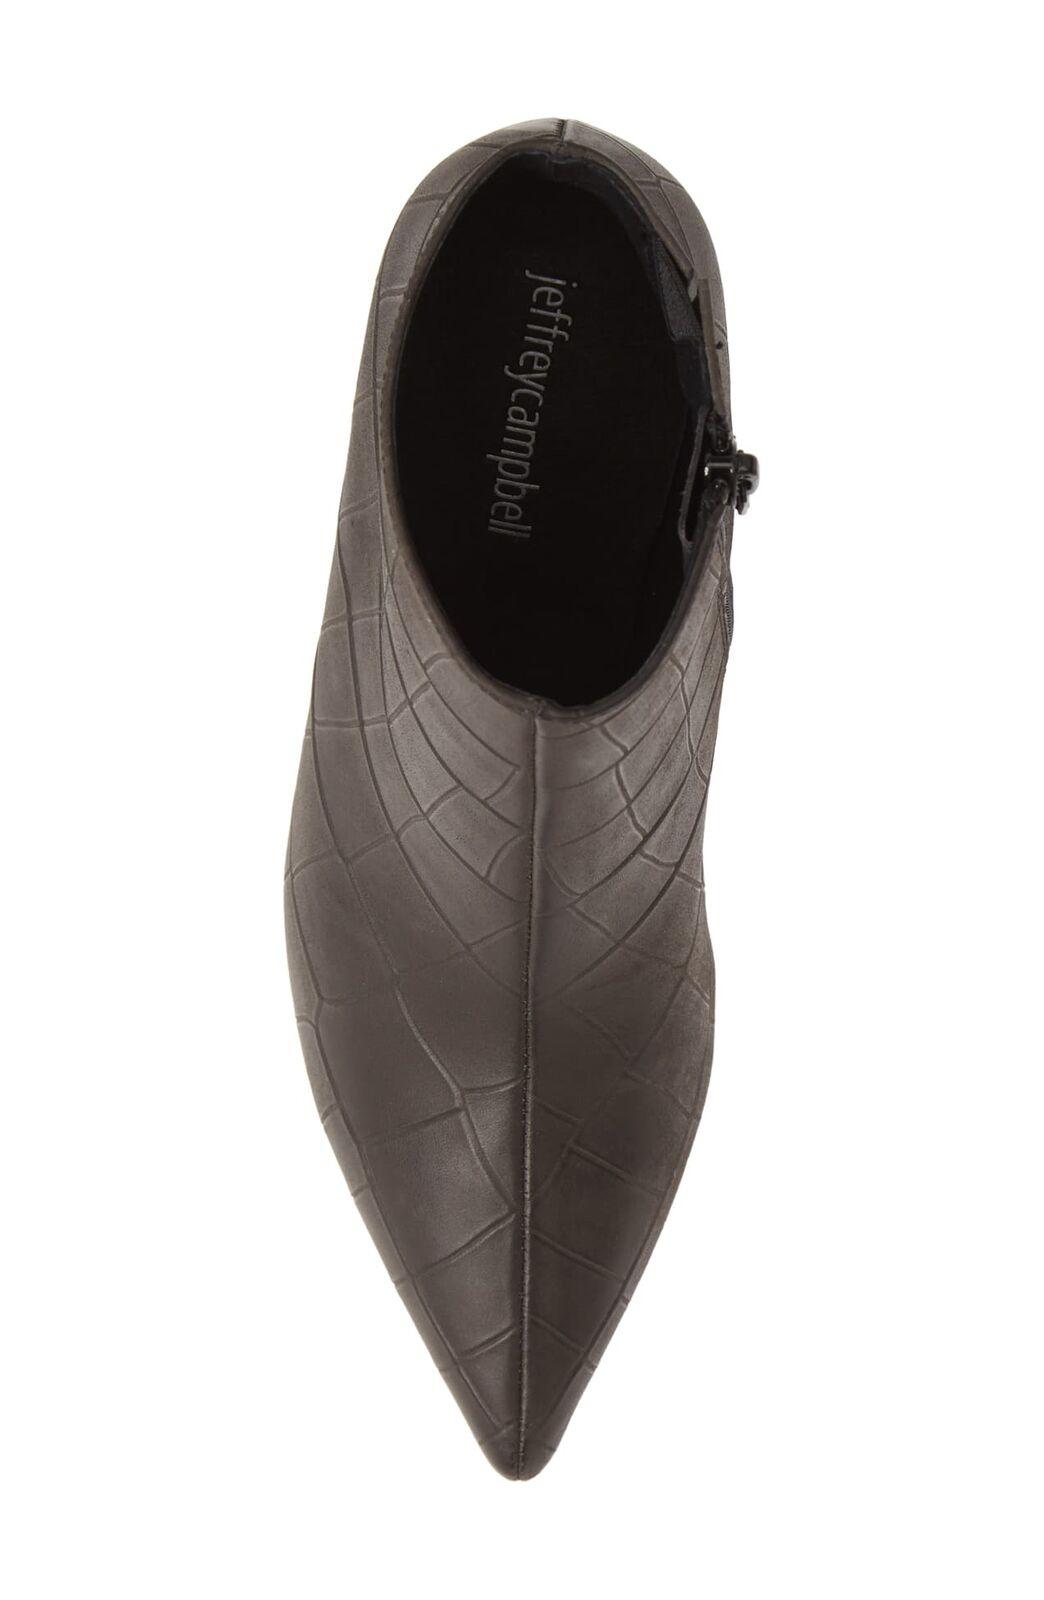 Jeffrey Campbell FINAL Boots Dark Grey Big Croco Size US 6 - SVNYFancy